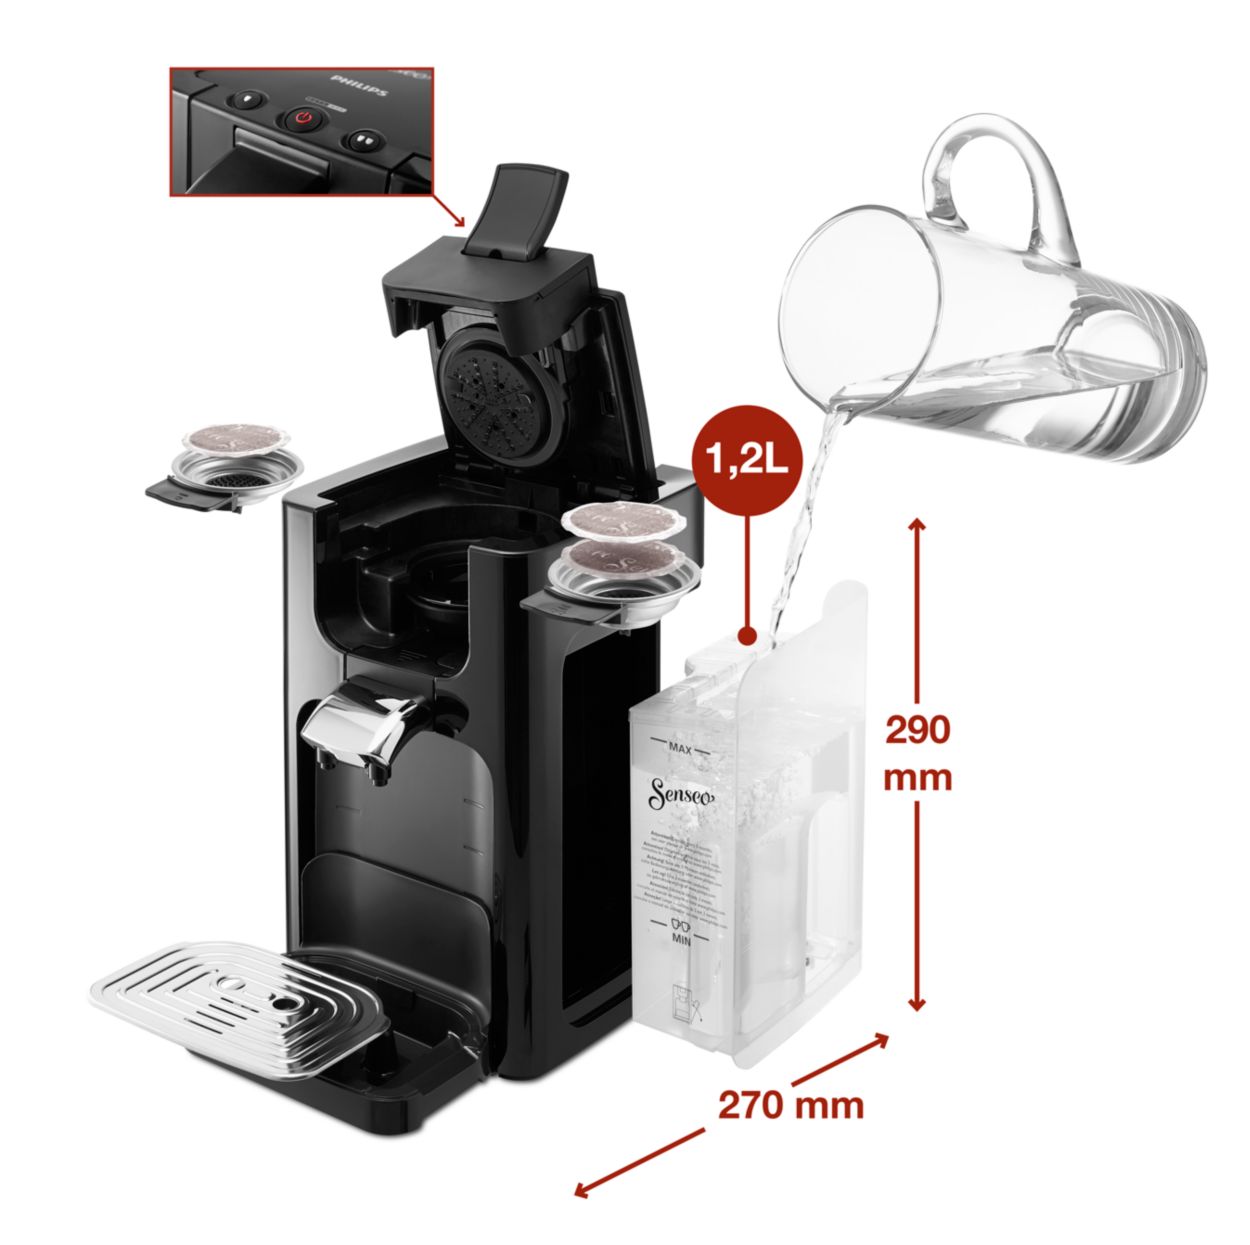 Quadrante Coffee pod machine HD7866/21R1